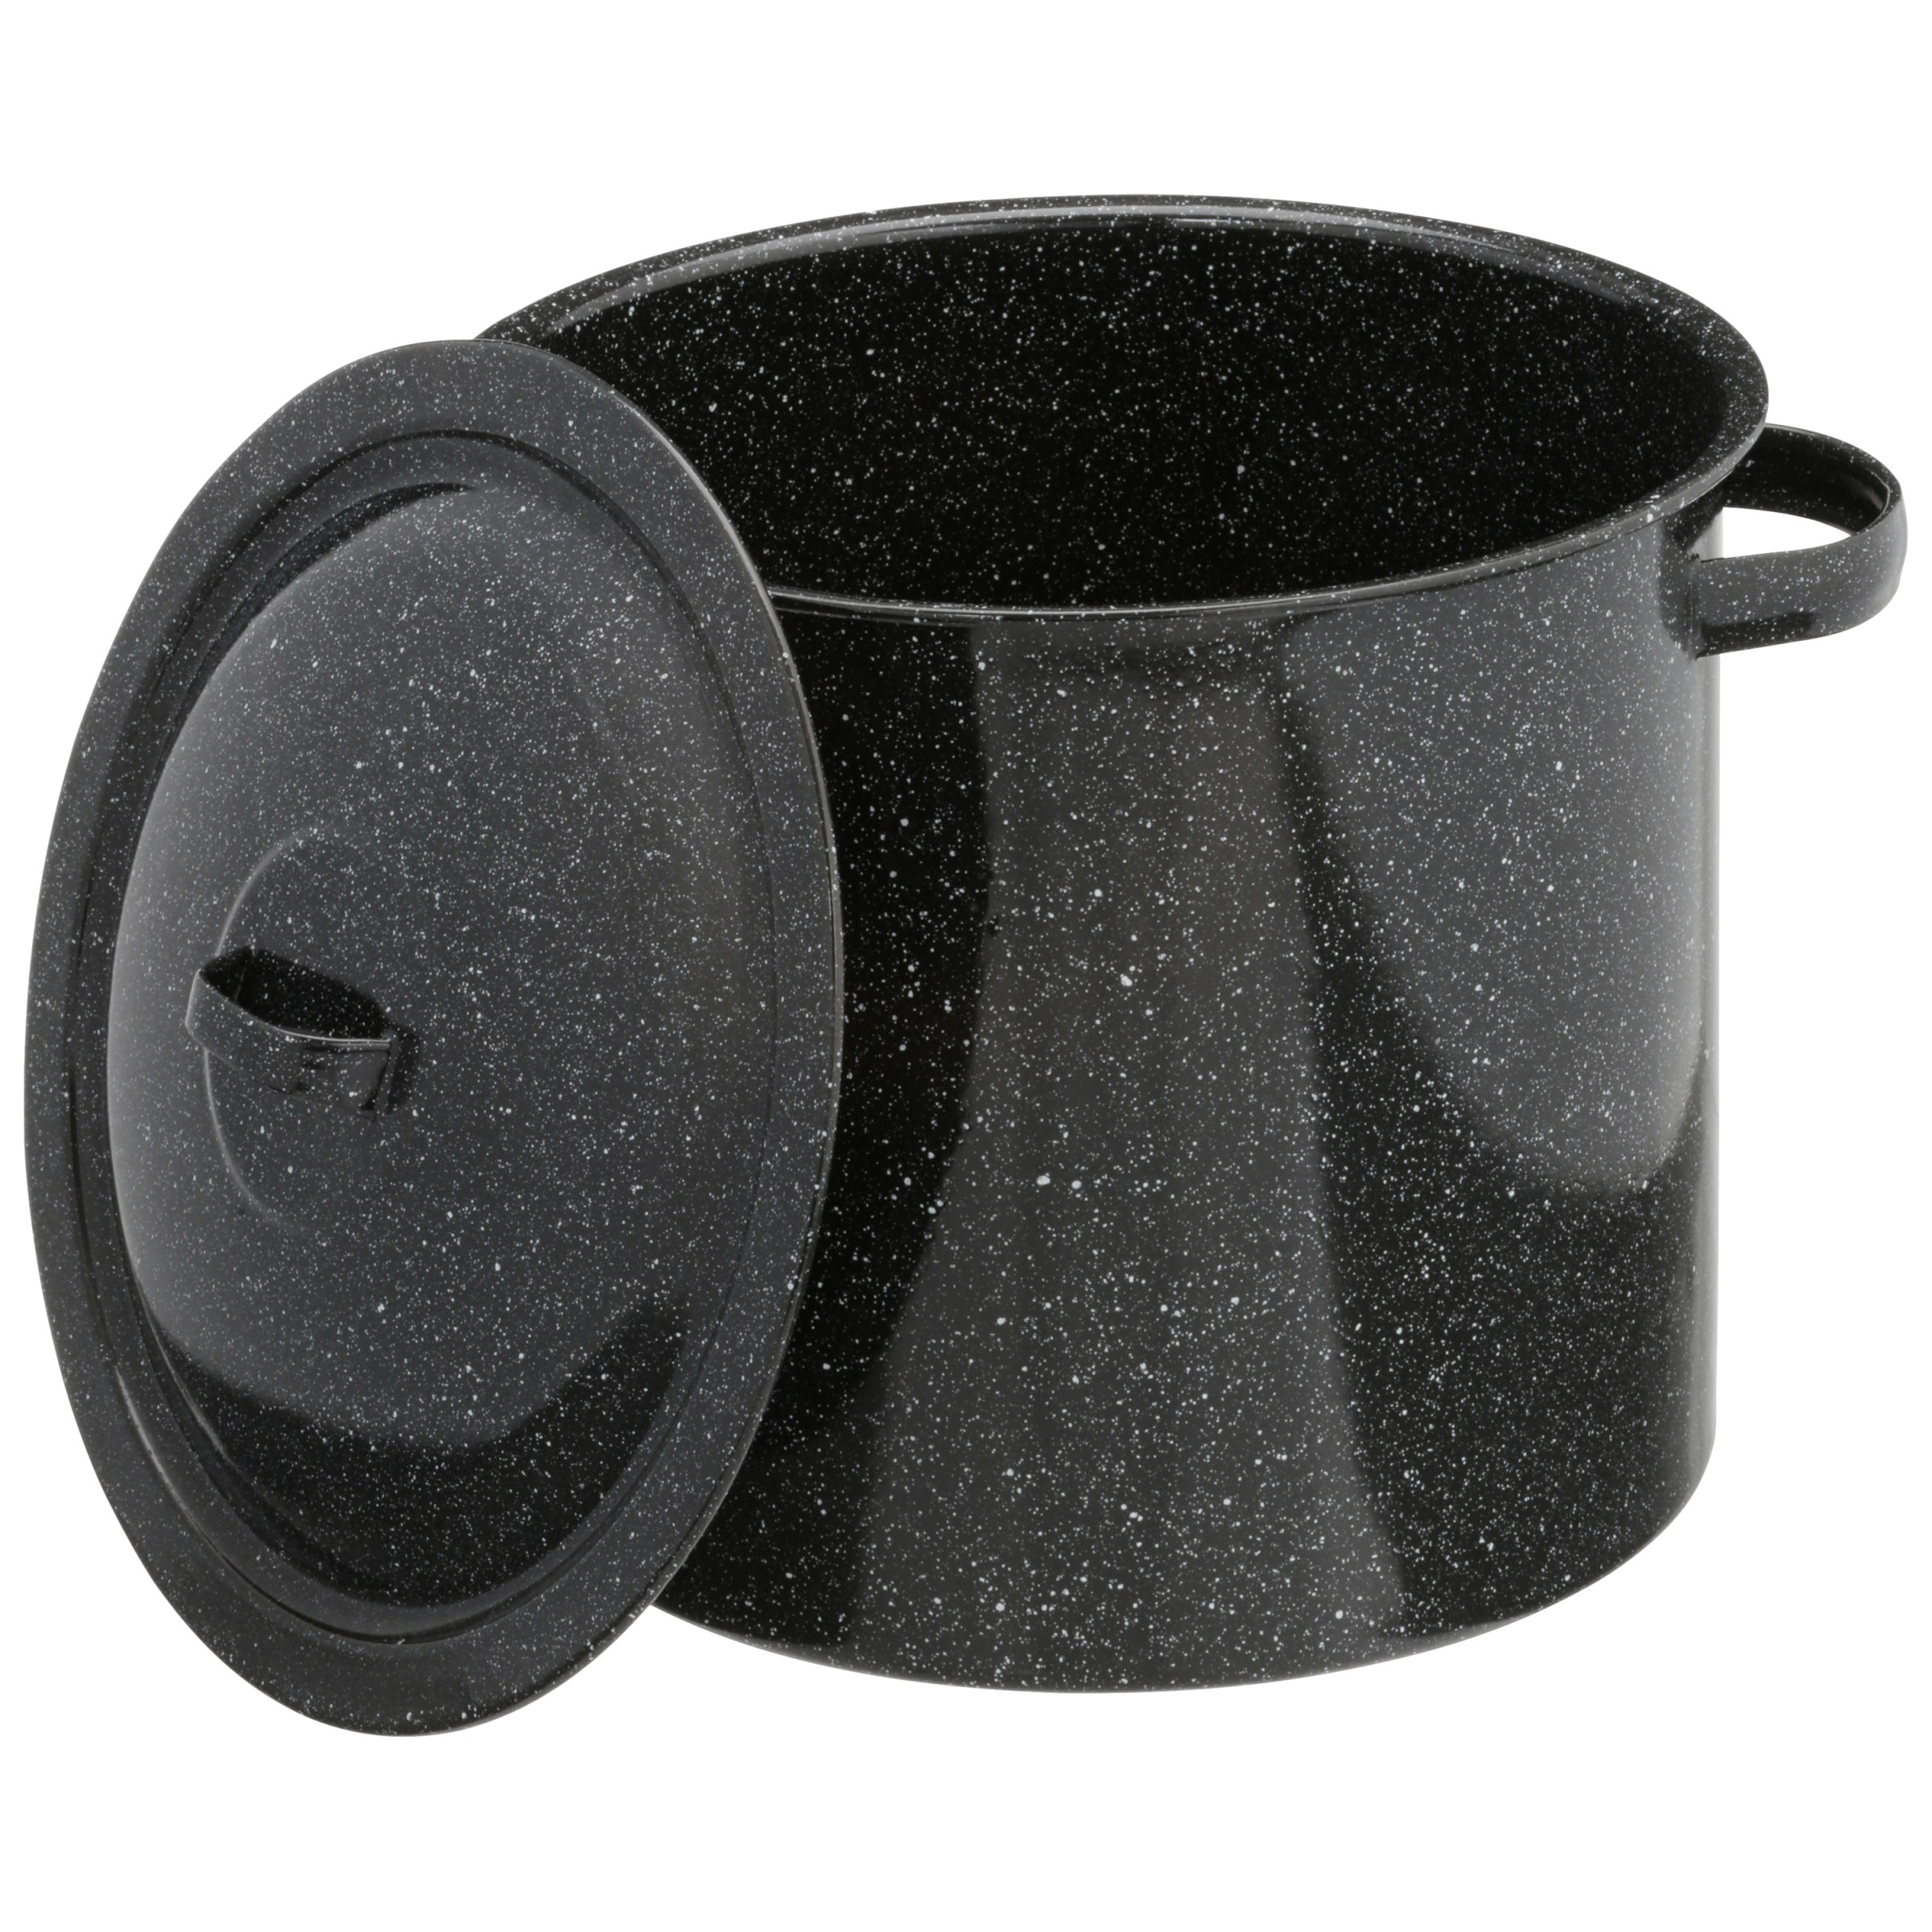 Granite-Ware Enamel on Steel 12 Quart Stock Pot with Lid - Black - image 3 of 5